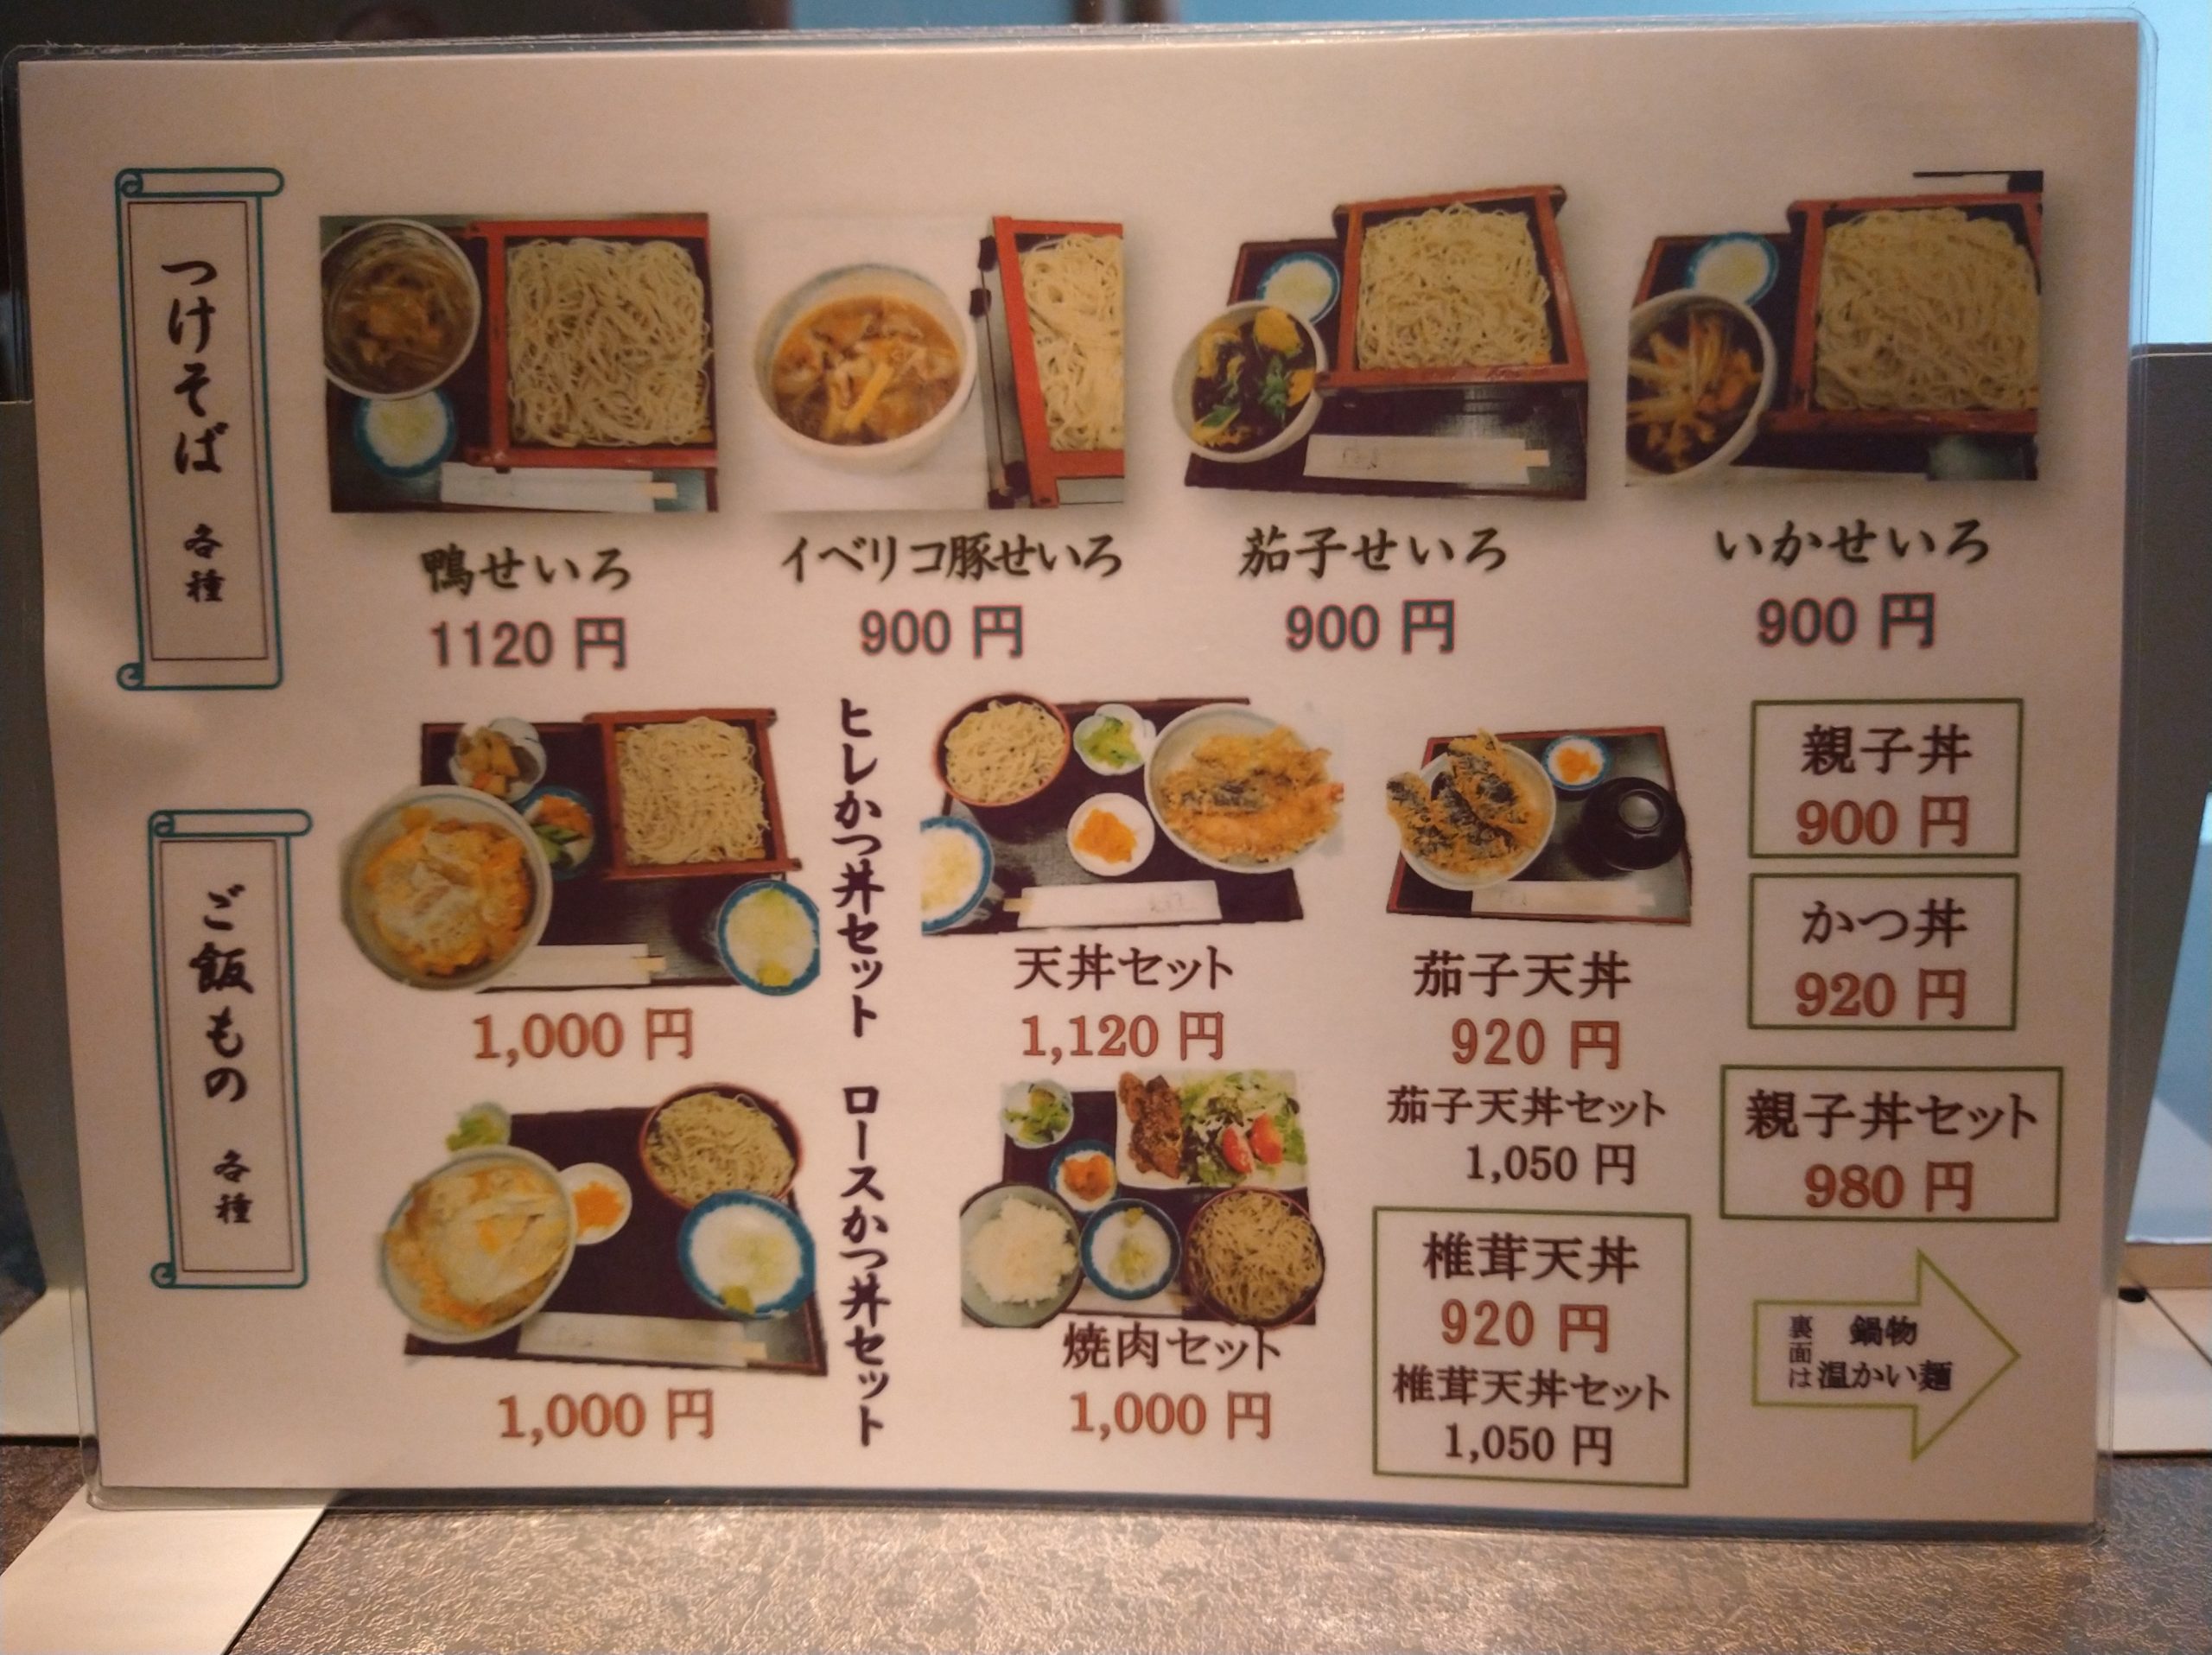 yabusen-kanda-menu-03